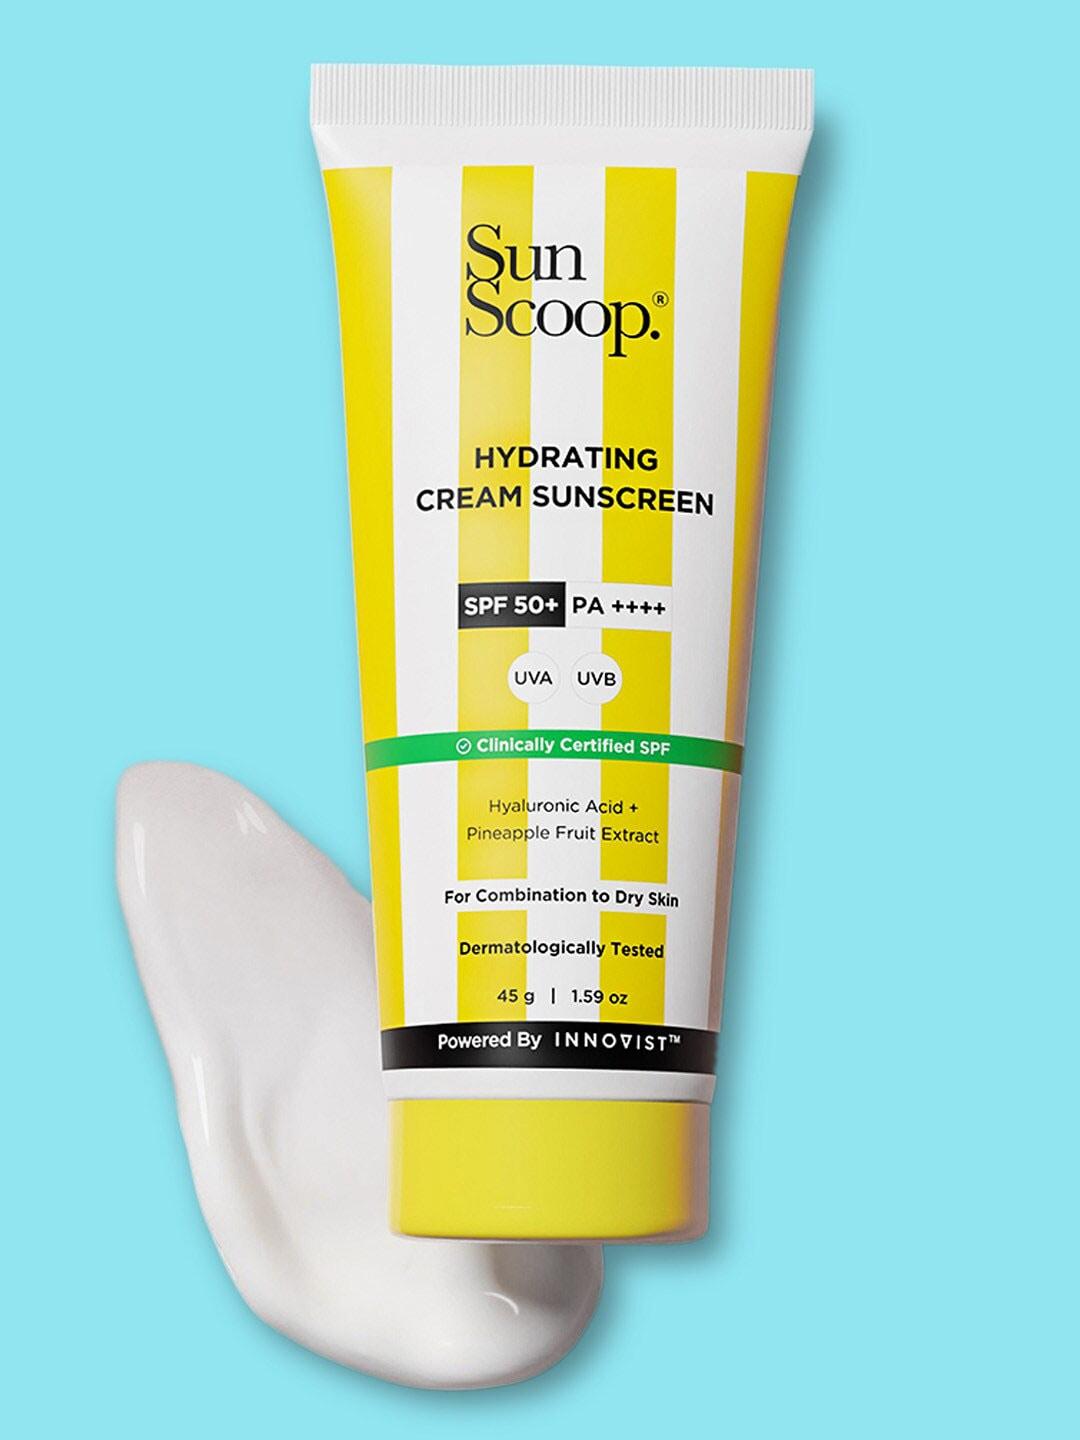 sunscoop hydrating cream sunscreen spf 50+ pa++++ - 45g